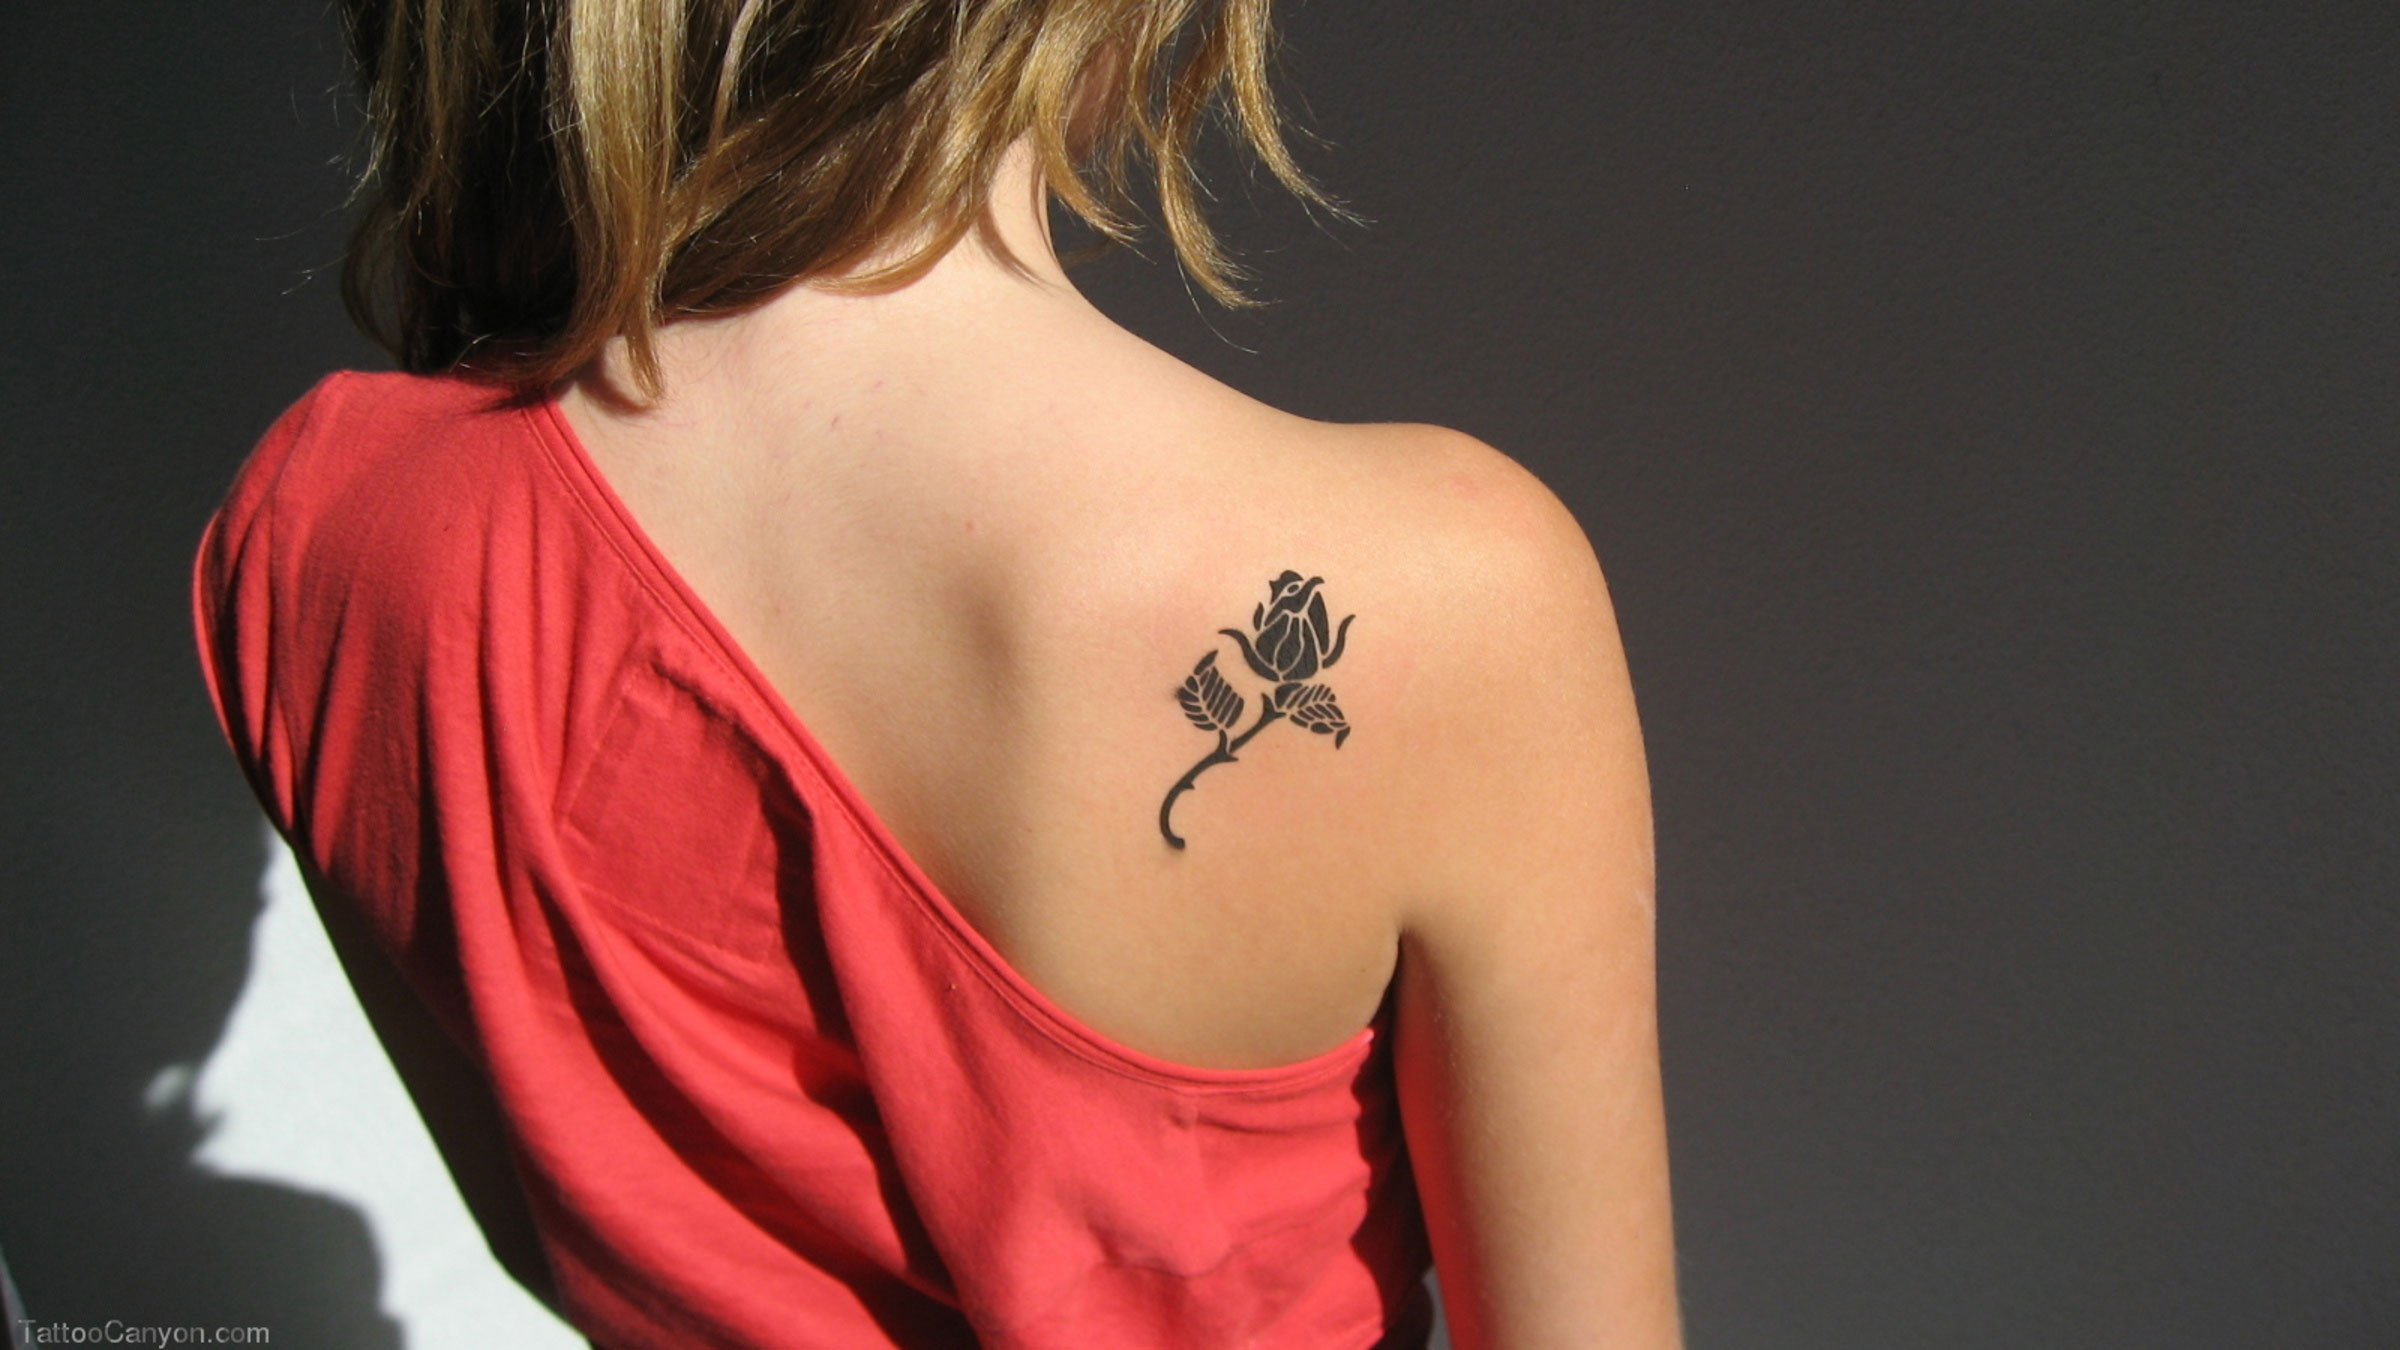 Minimalist Shoulder Tattoos for Women - wide 1